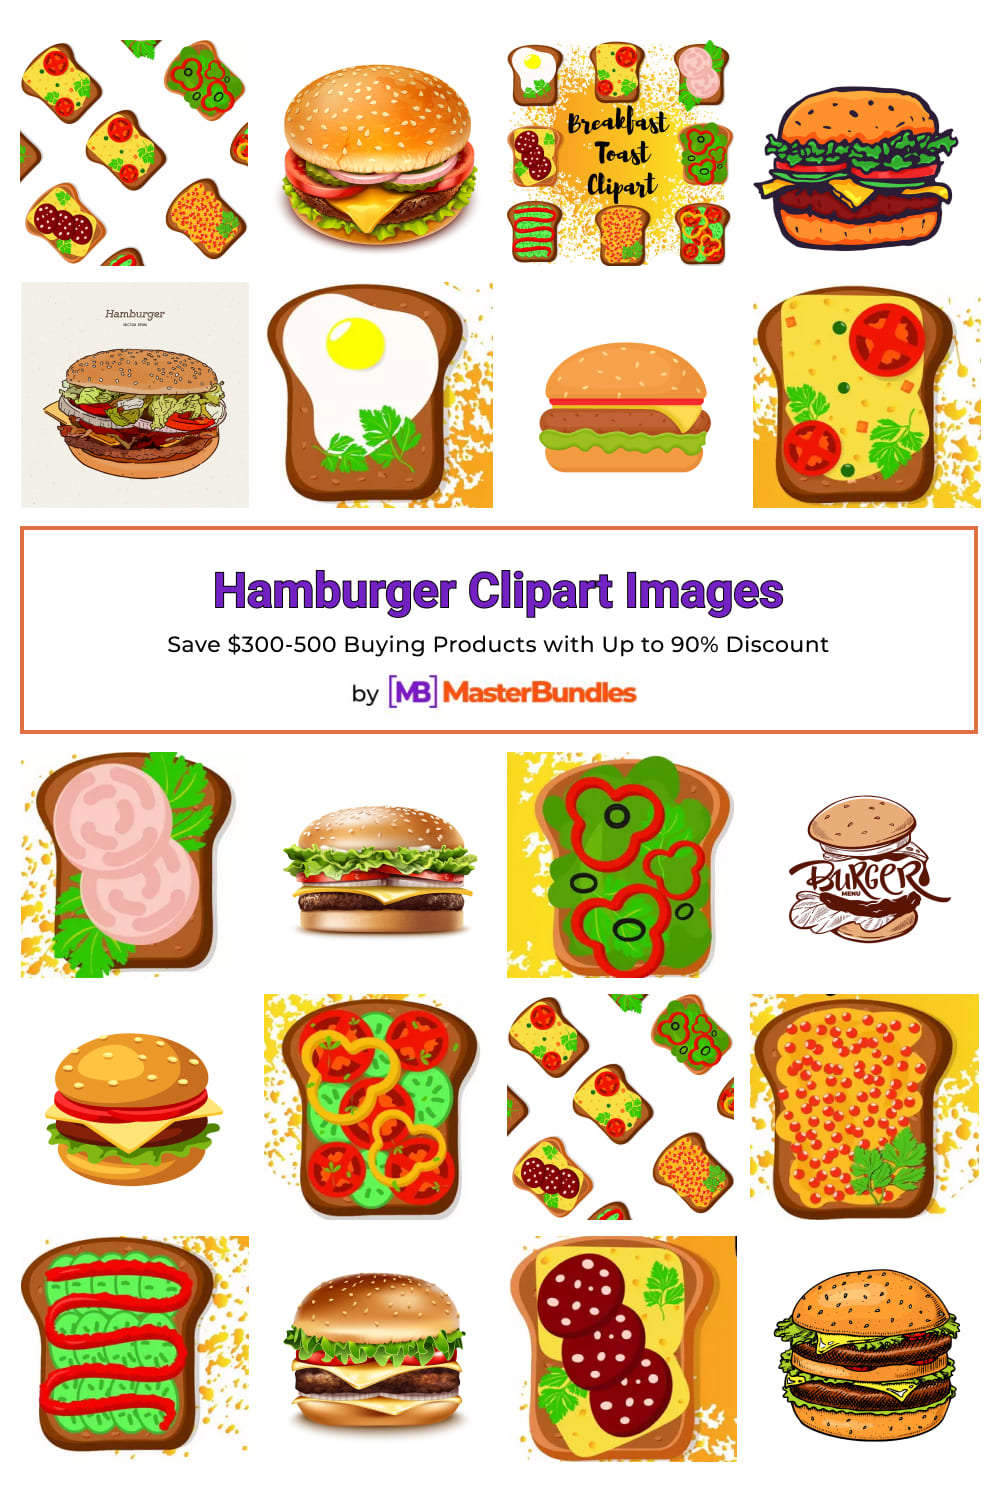 Hamburger clipart images Pinterest.